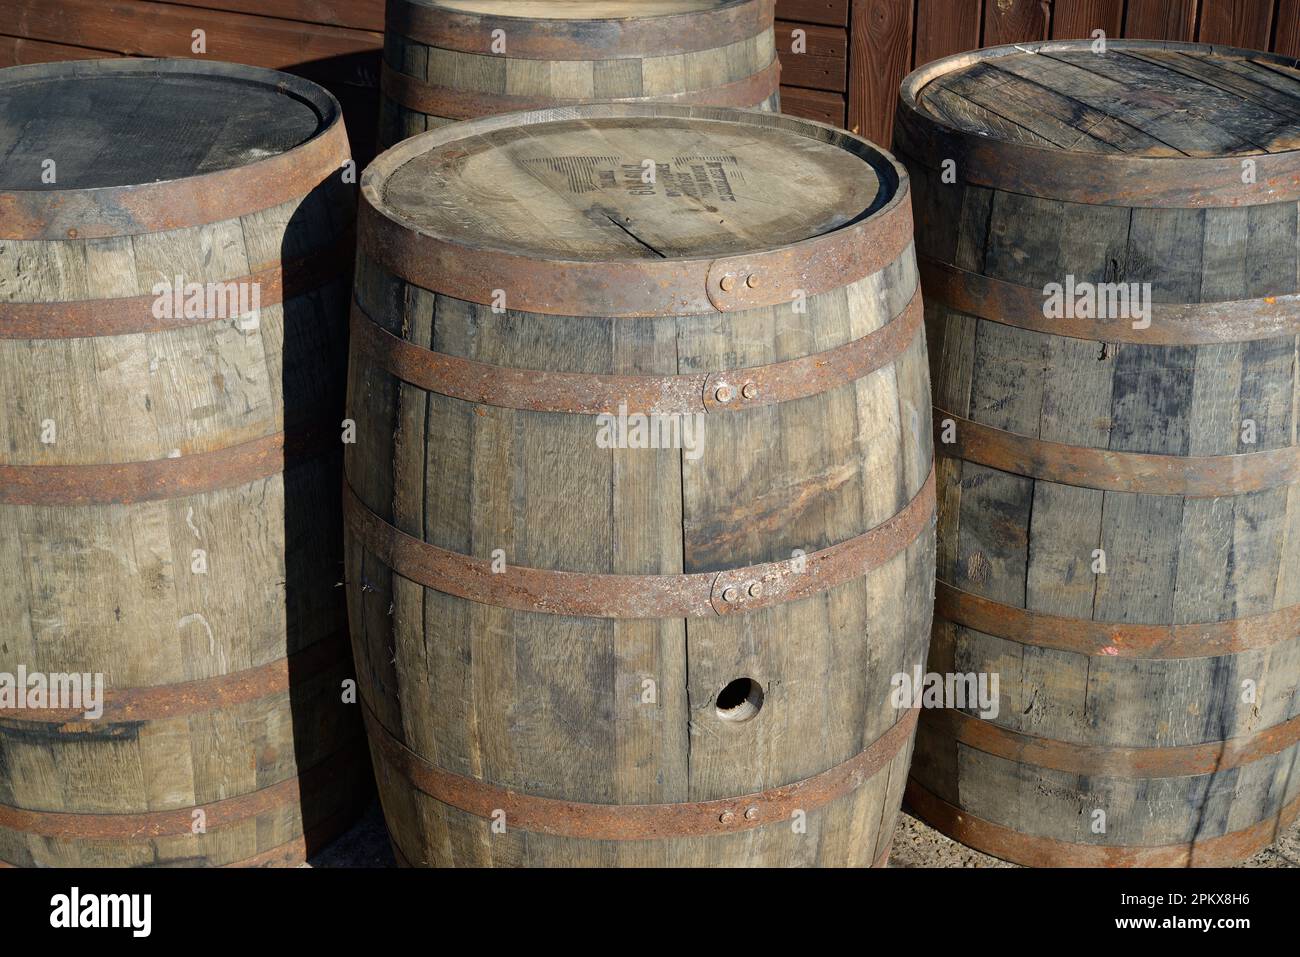 Whiskey or whisky barrels Stock Photo